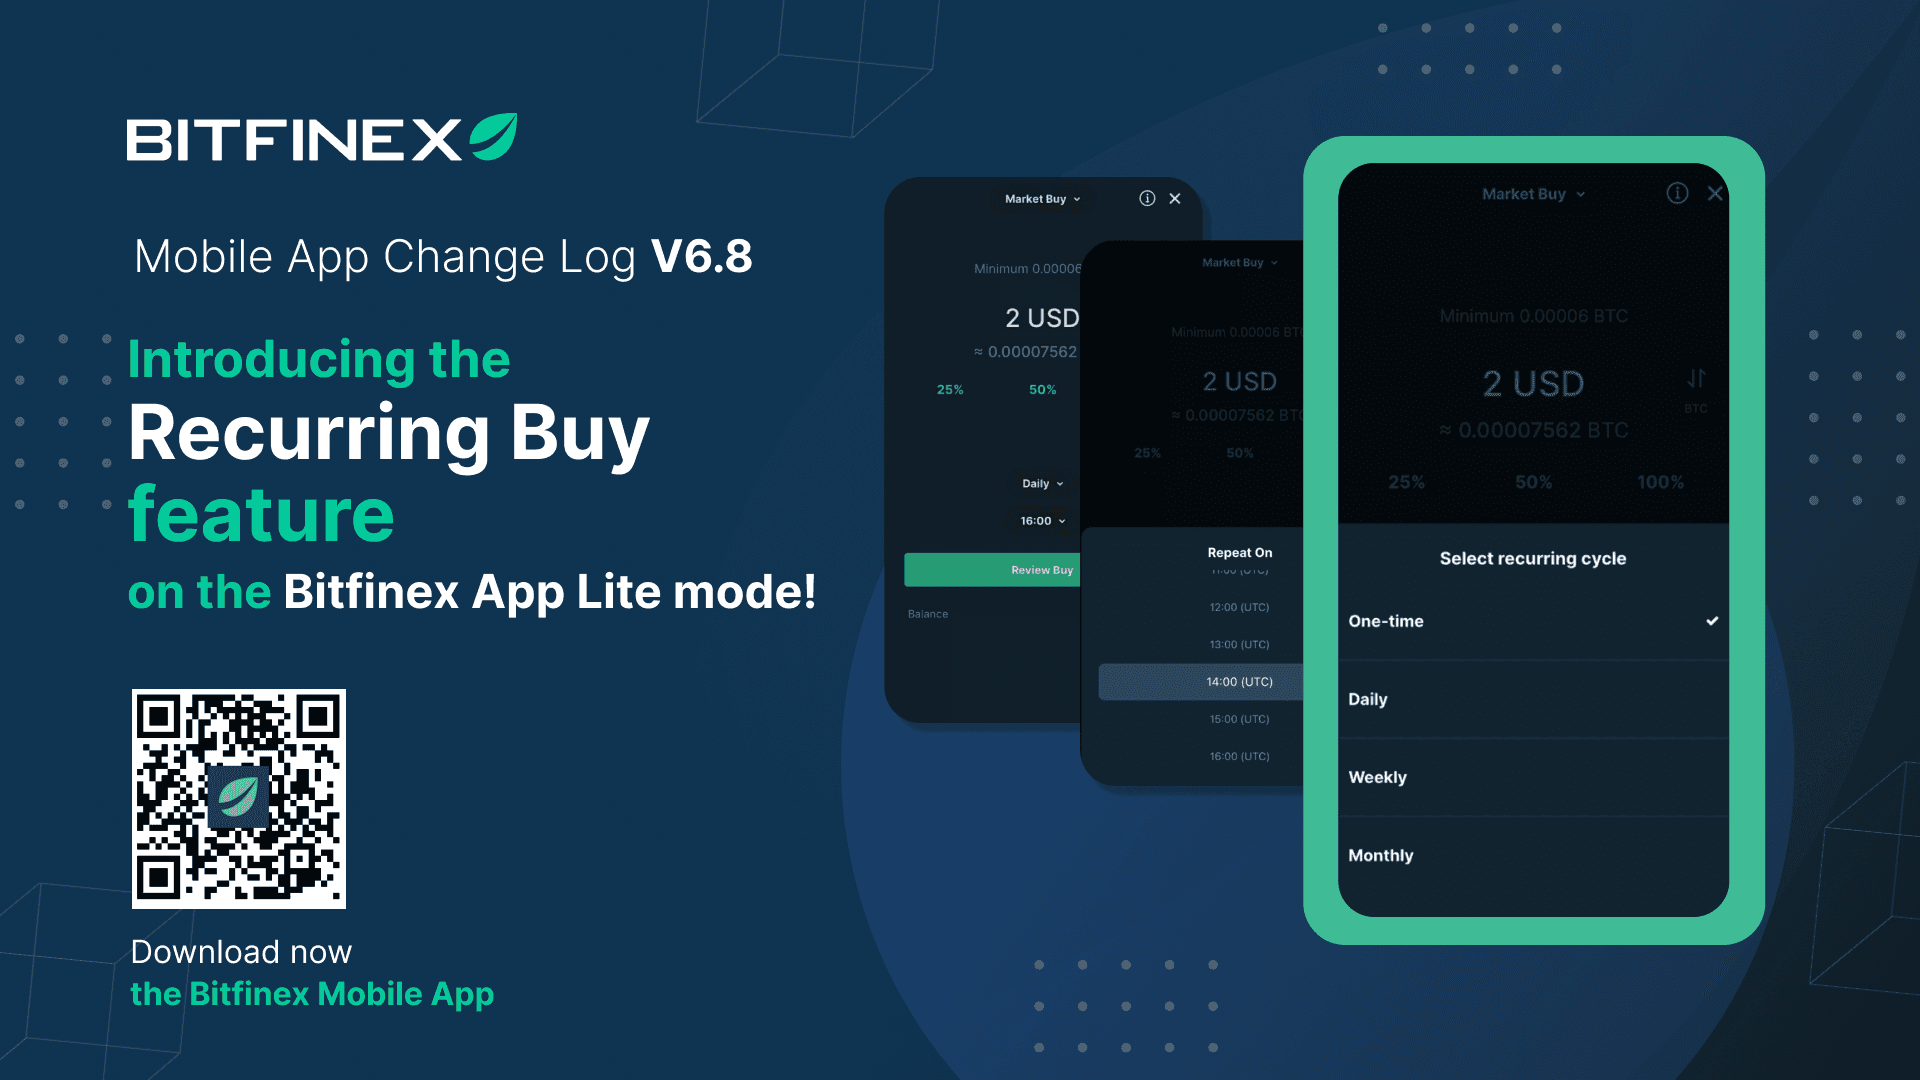 Mobile App Change Log 6.8